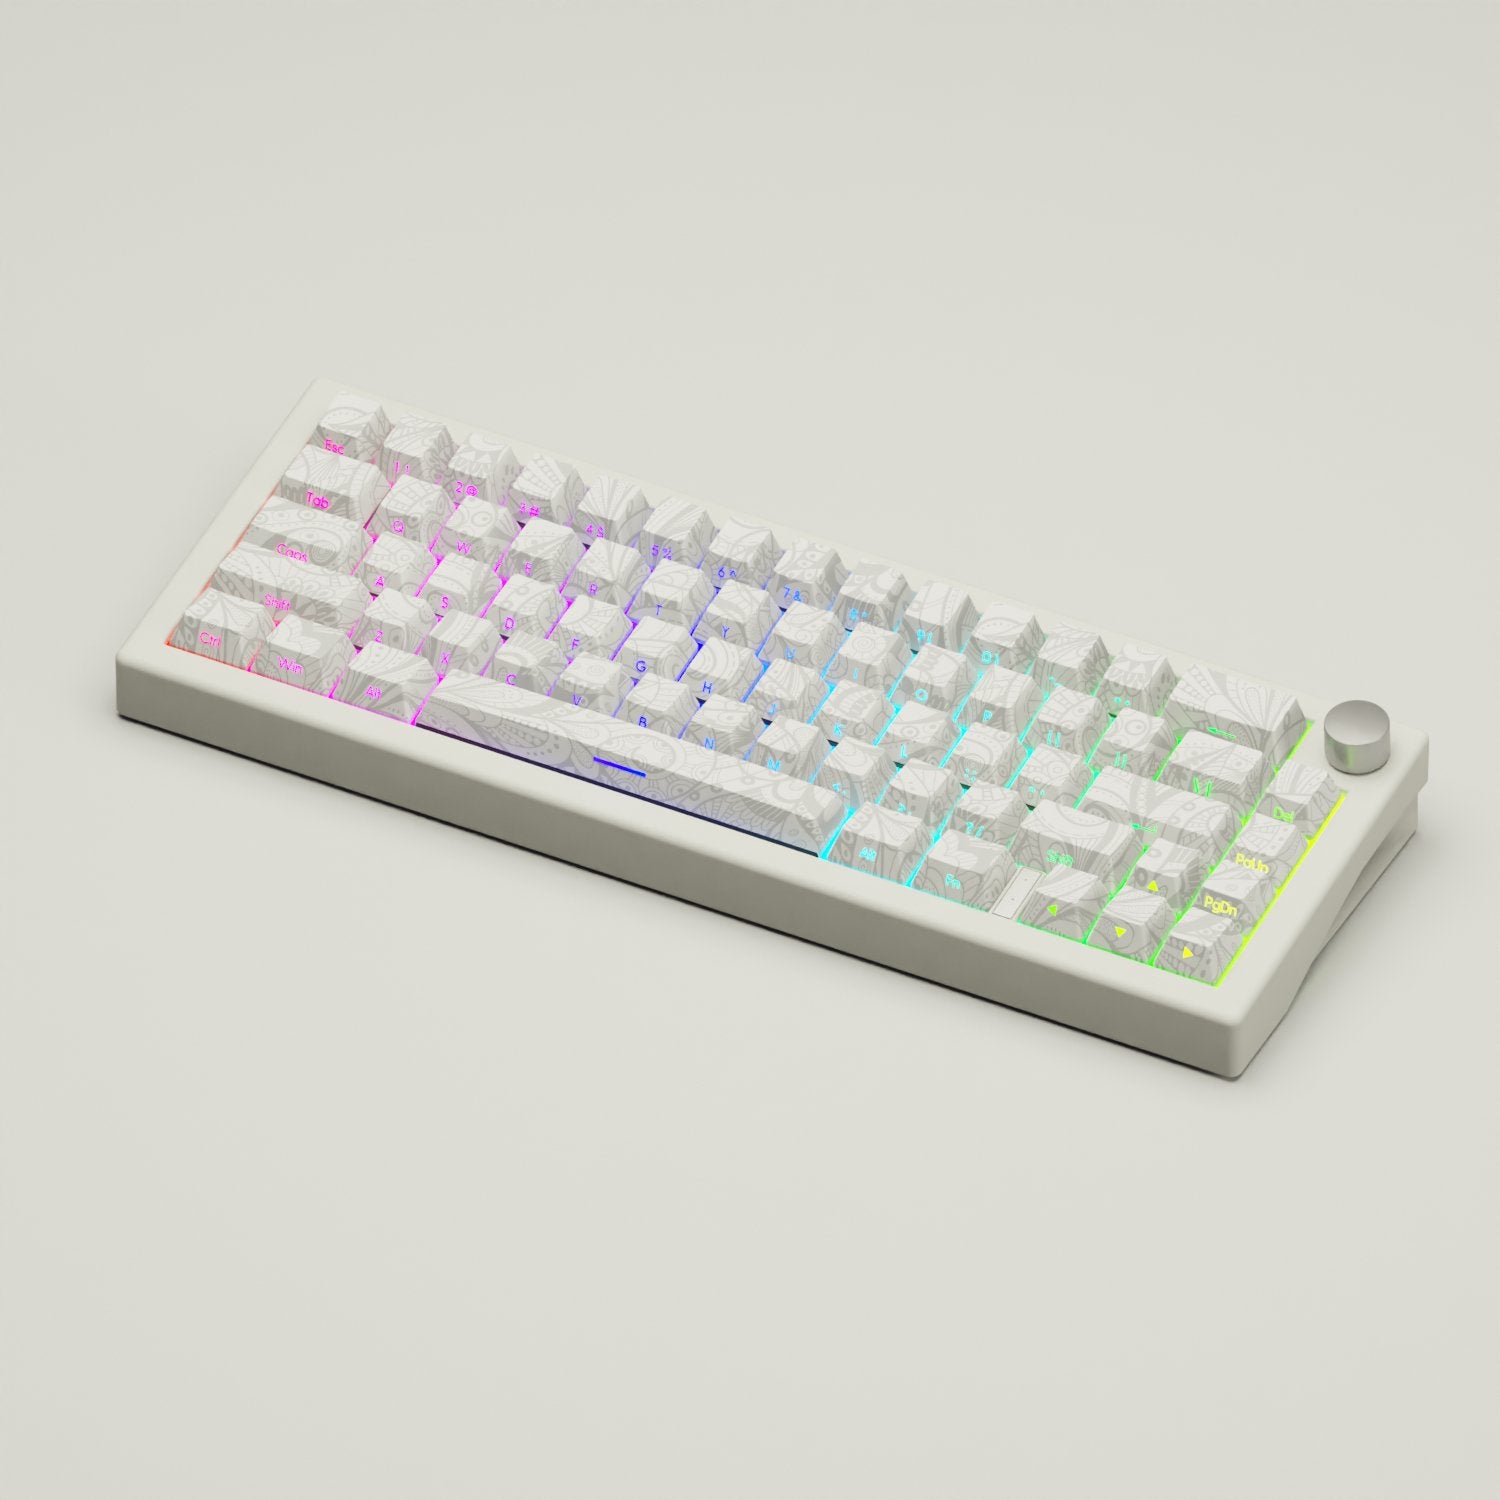 Schnellegang (WHITE) GMK67 Keyboard(65% Mechanical Keyboard with knob) - Goblintechkeys